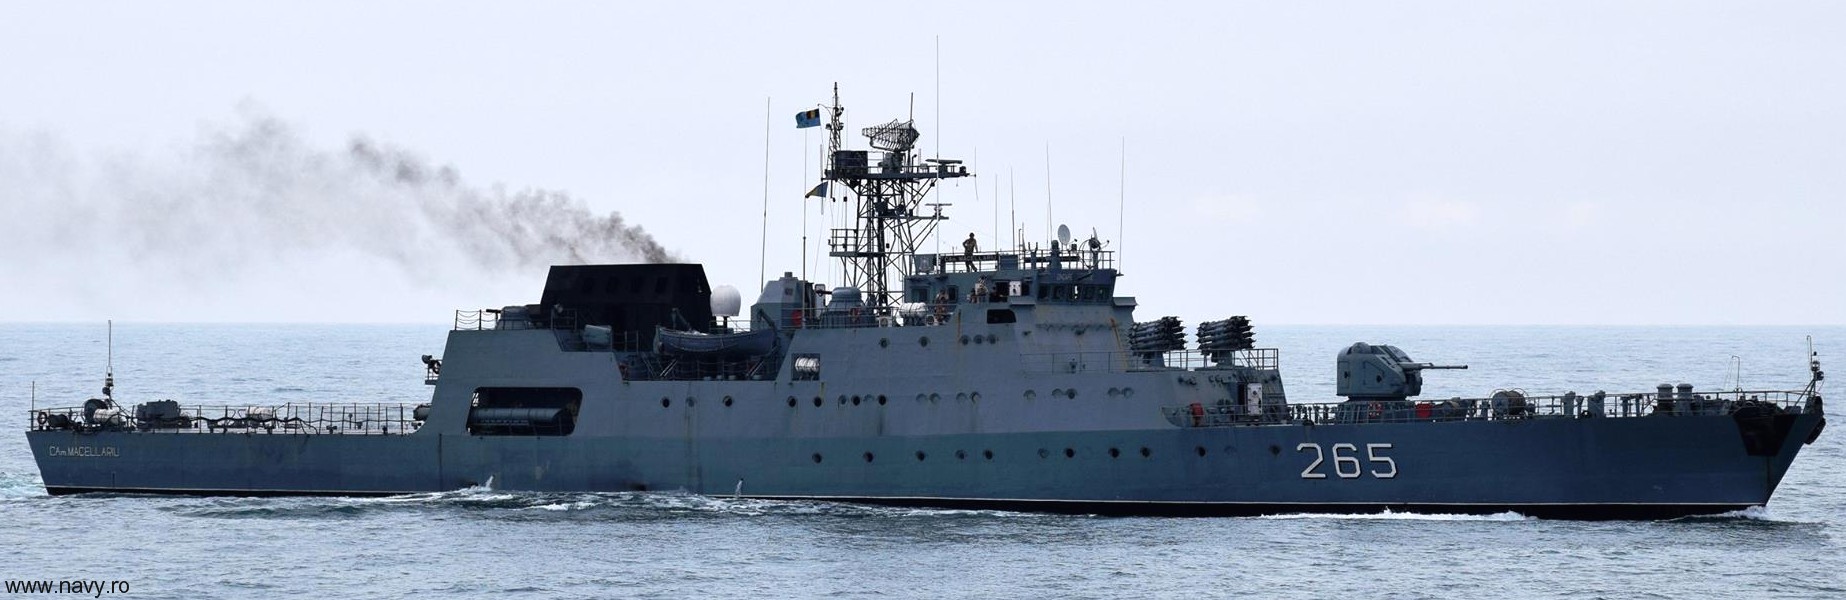 f-265 ros contraamiral horia macellariu tetal-ii class corvette romanian navy 03